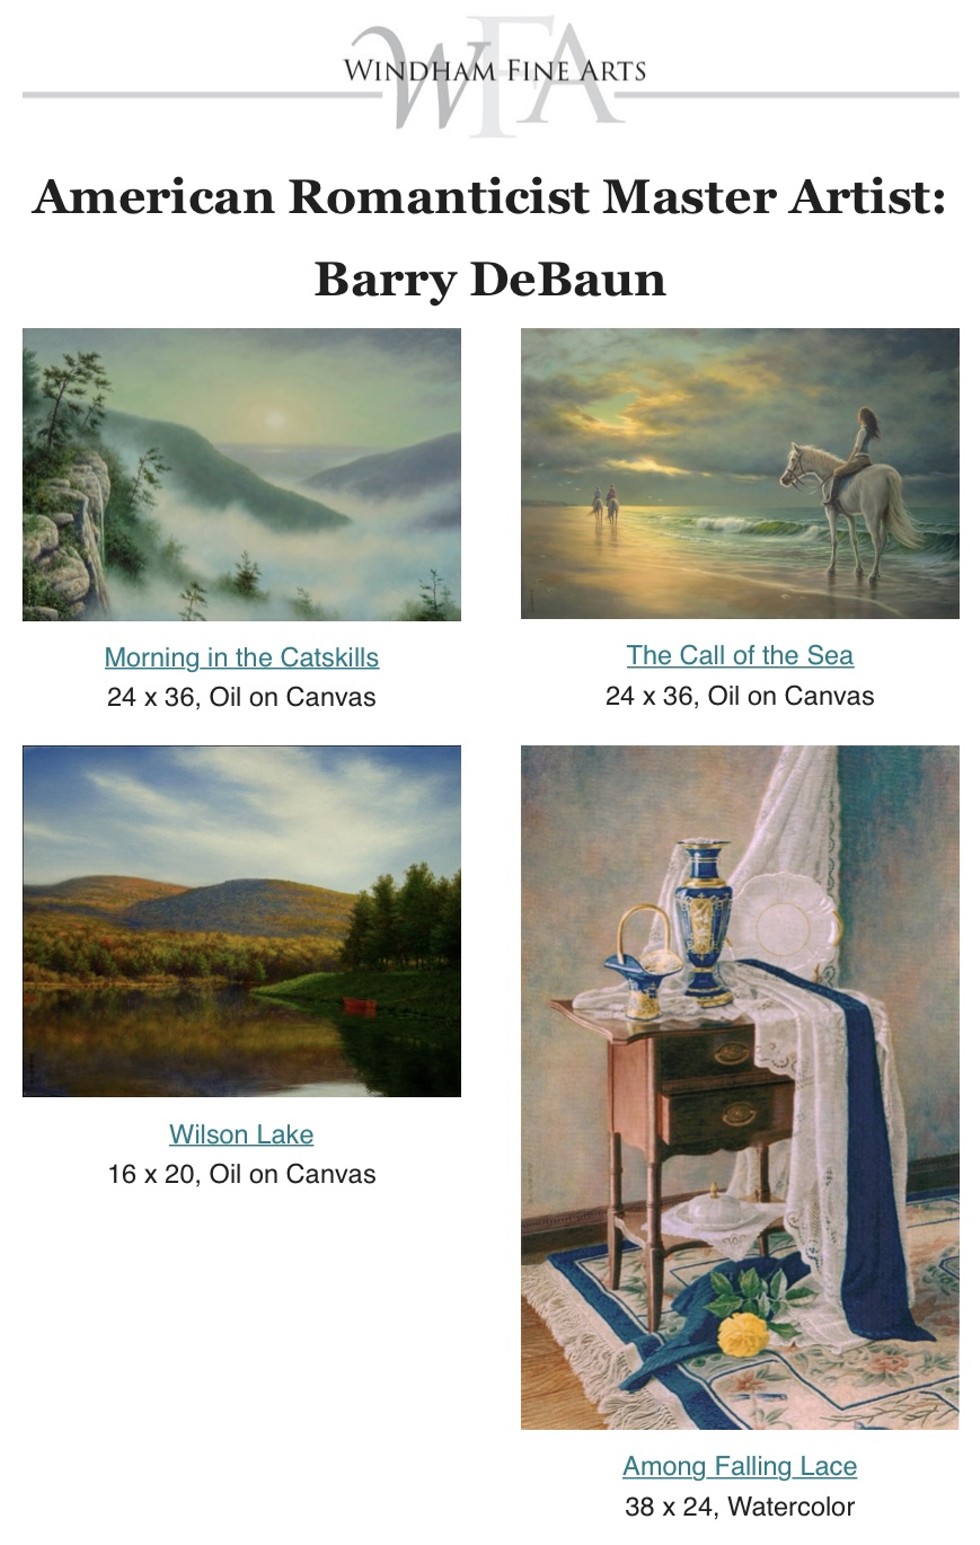 American Romanticist Master Artist: Barry DeBaun